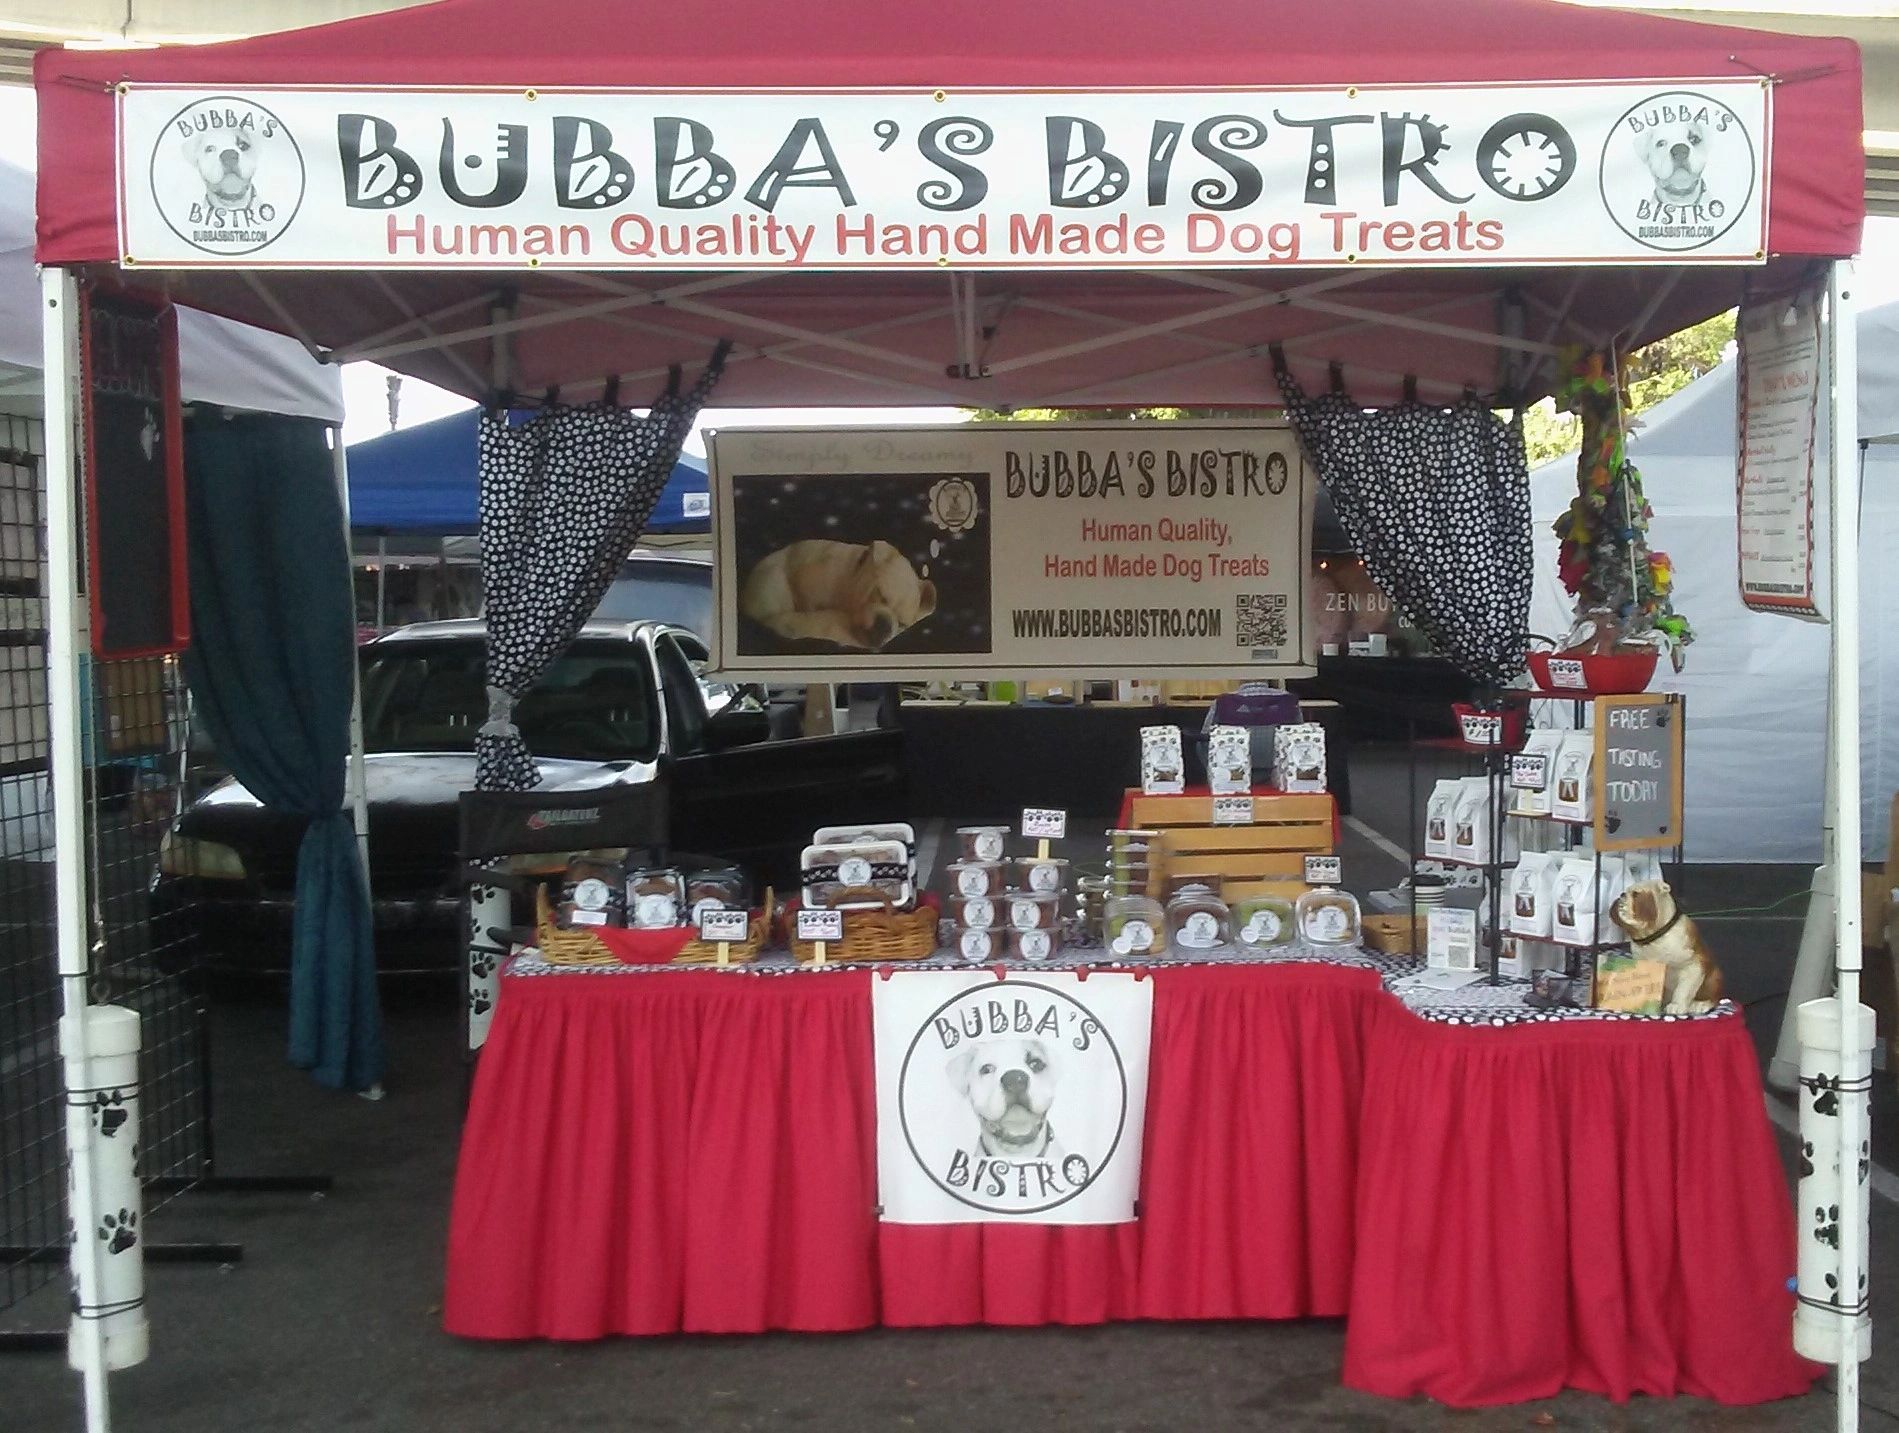 Bubba's Bistro Booth at Riverside Arts Market, Jax Fl.  Hand Made Human Quality  Dog Treats.